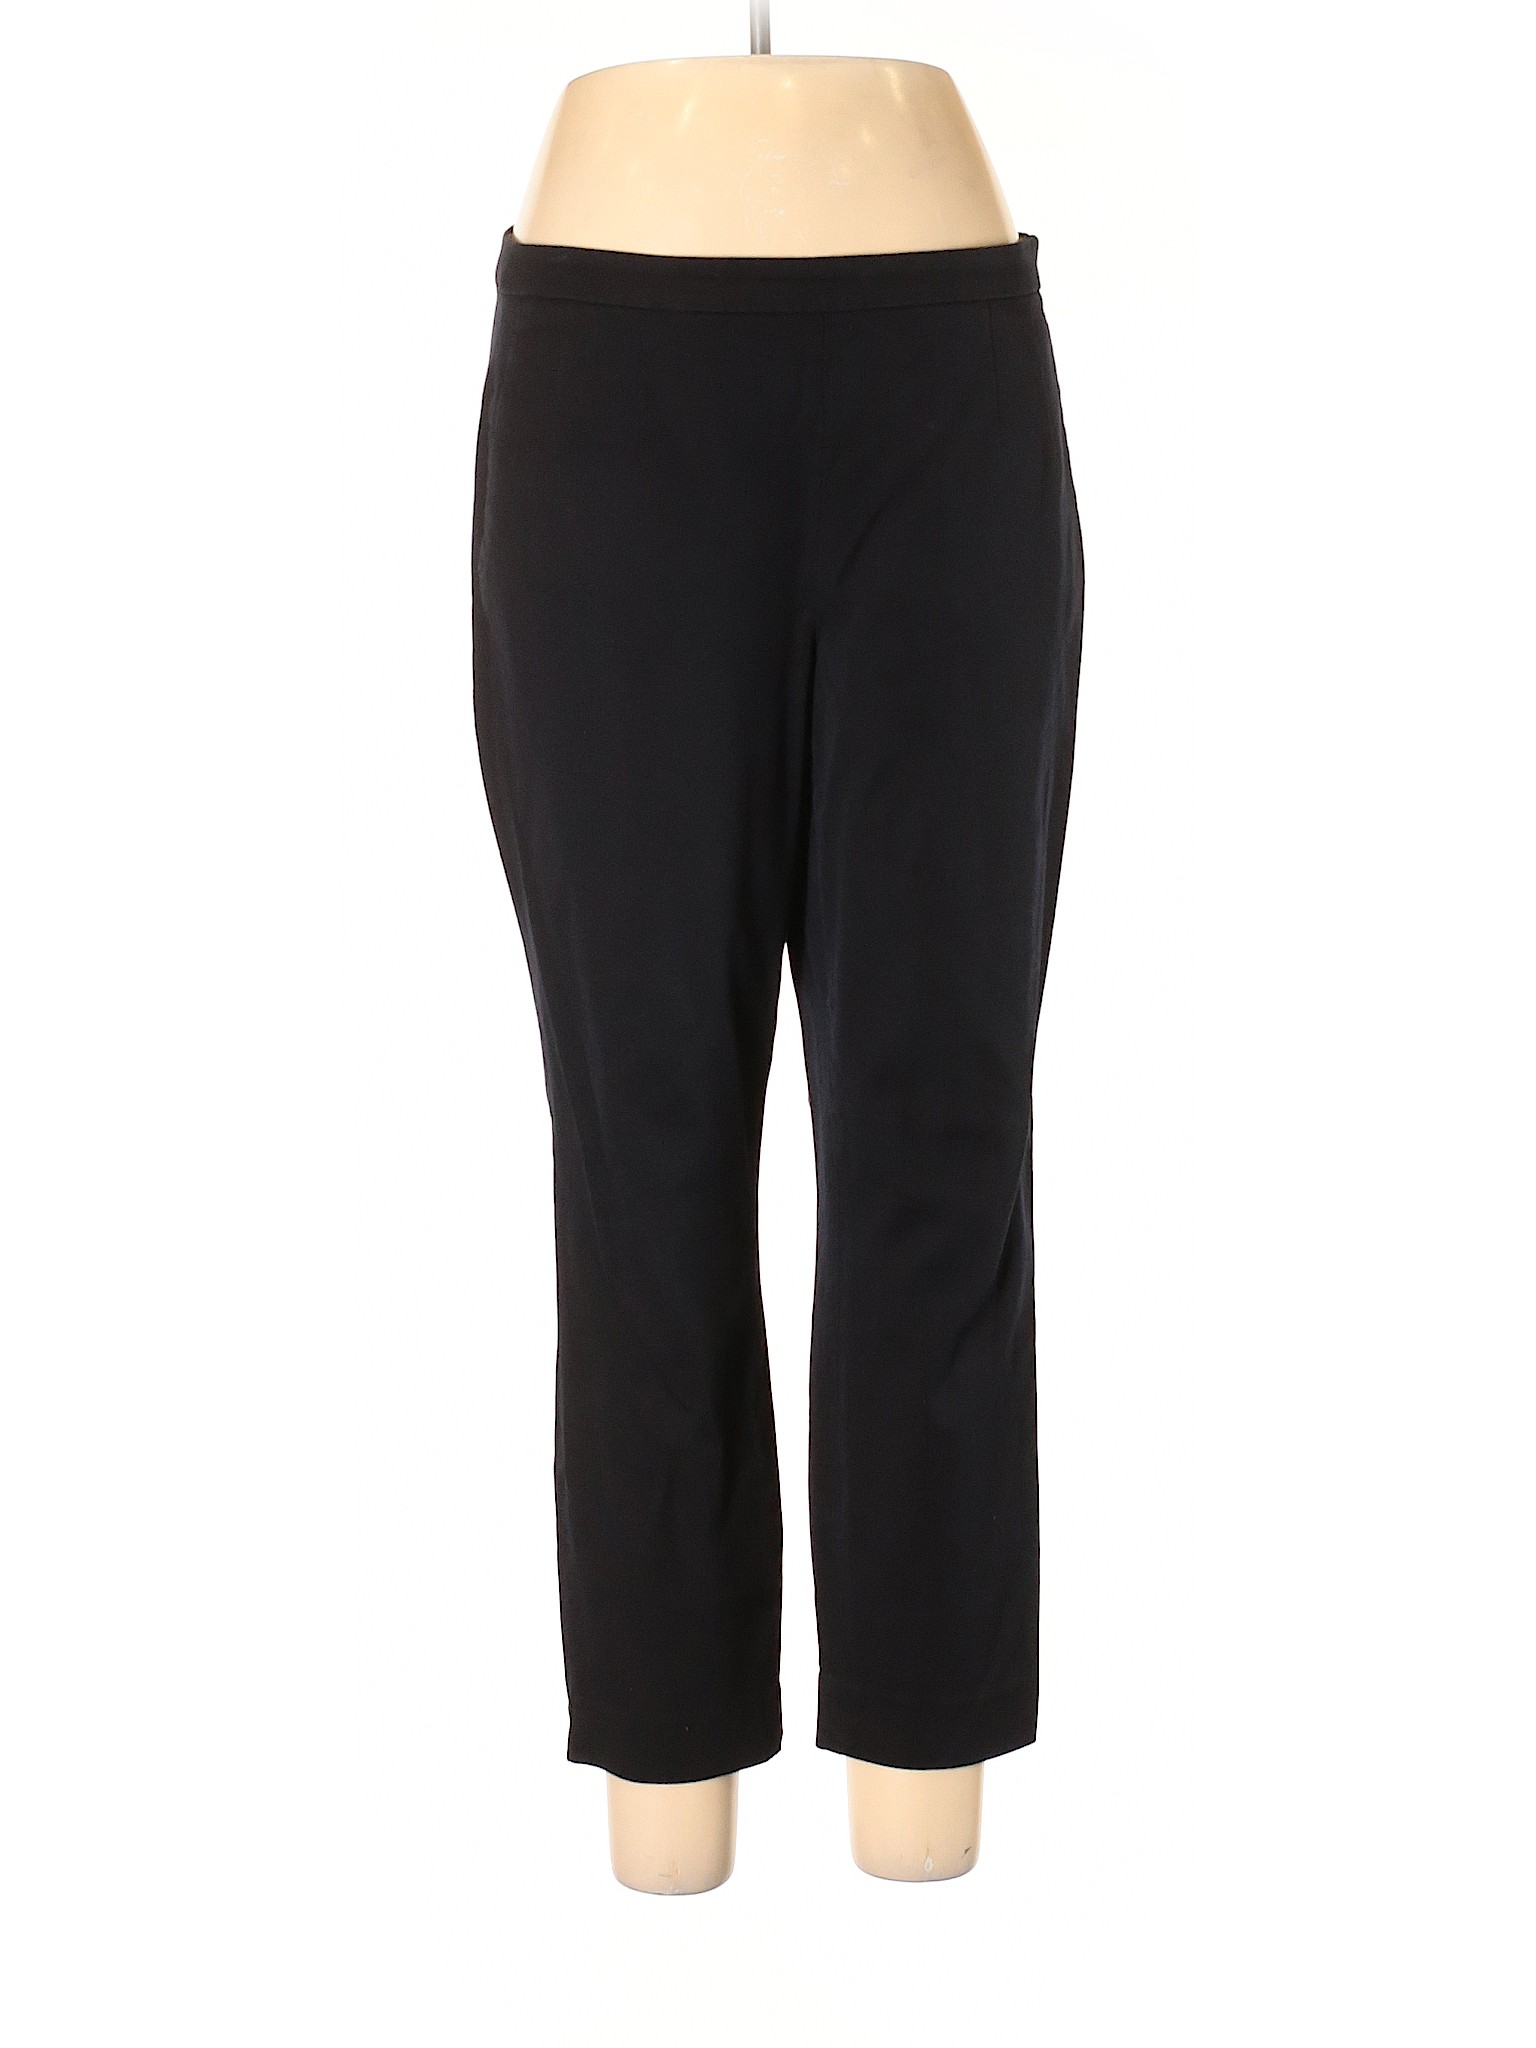 J. Crew Women Black Dress Pants 12 | eBay